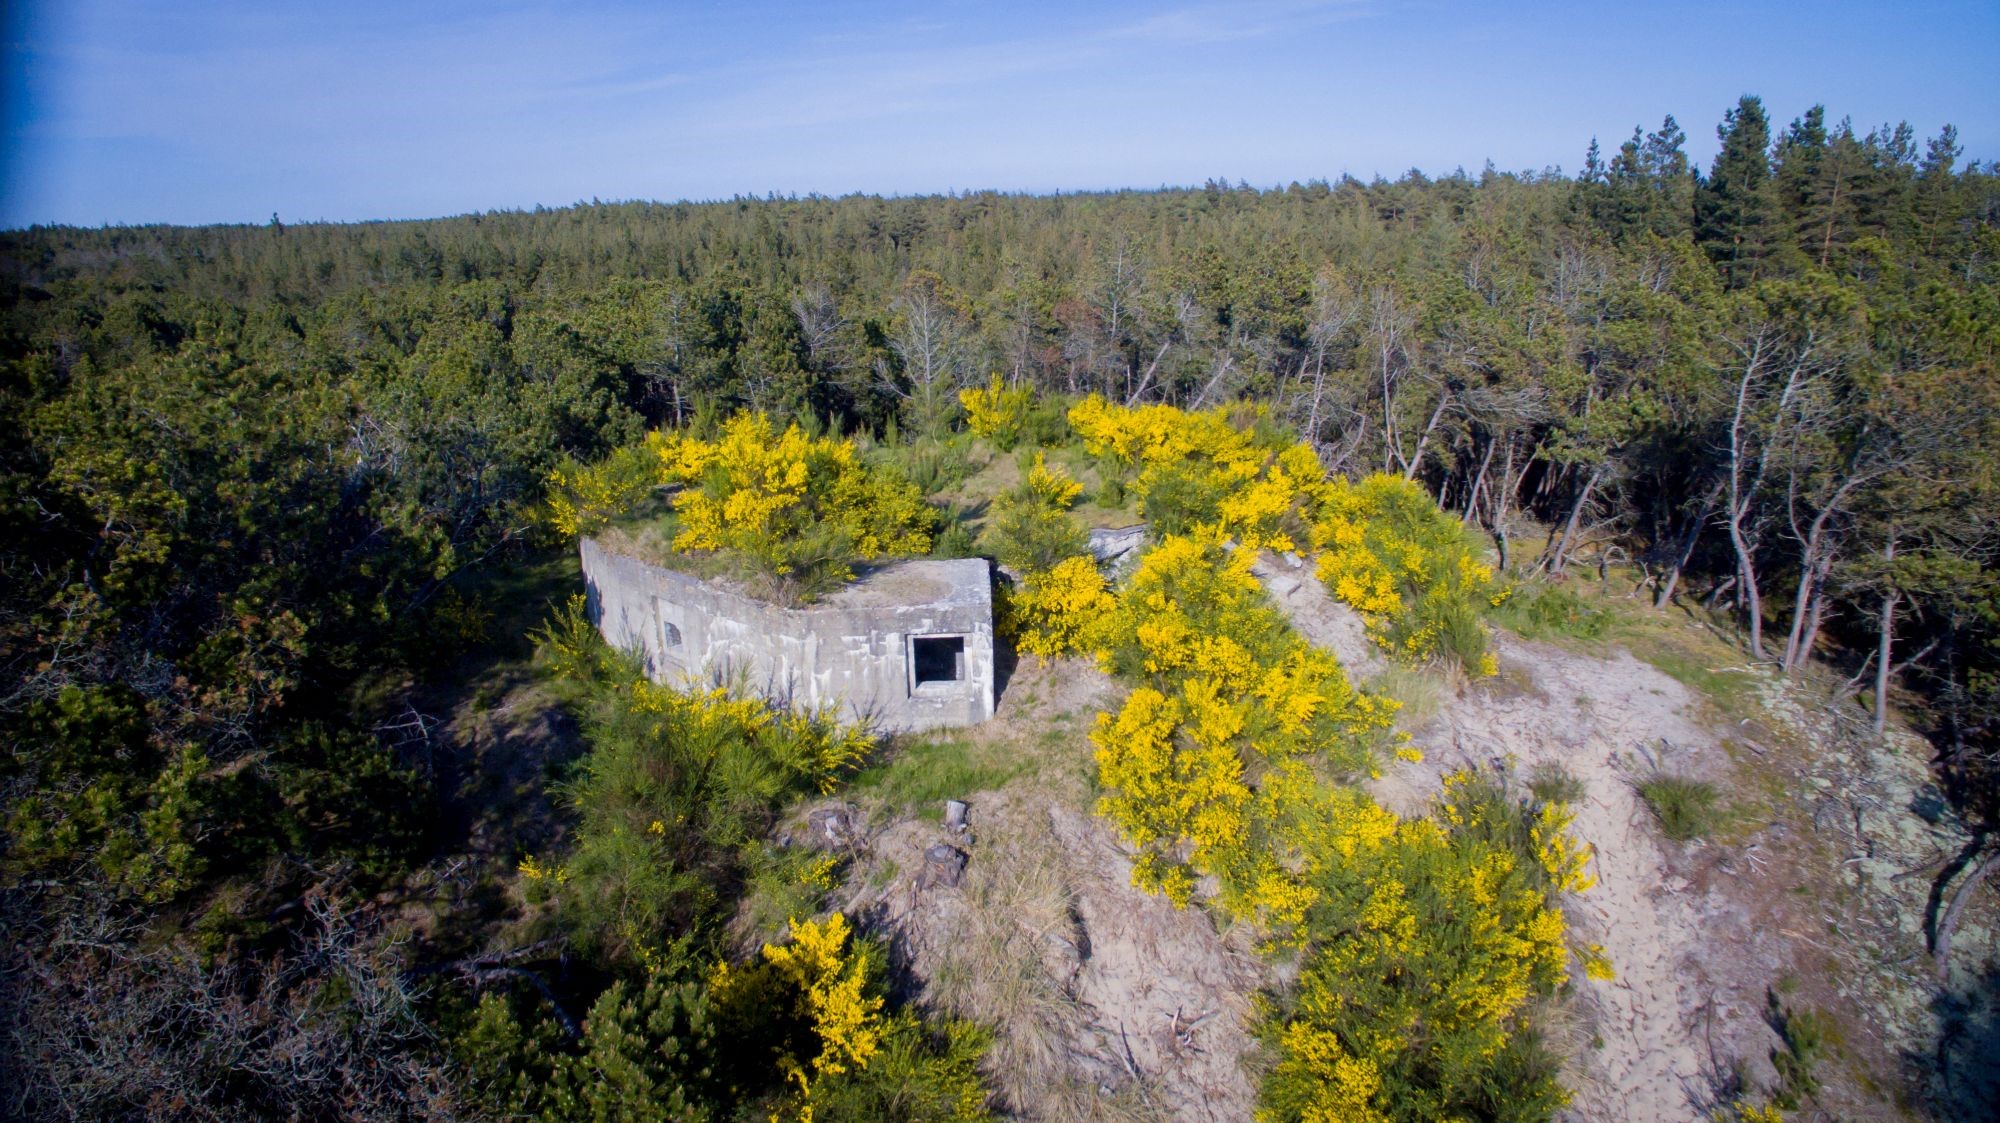 DJI_0003 - Bunken Plantage, bunker, dronefoto.jpg